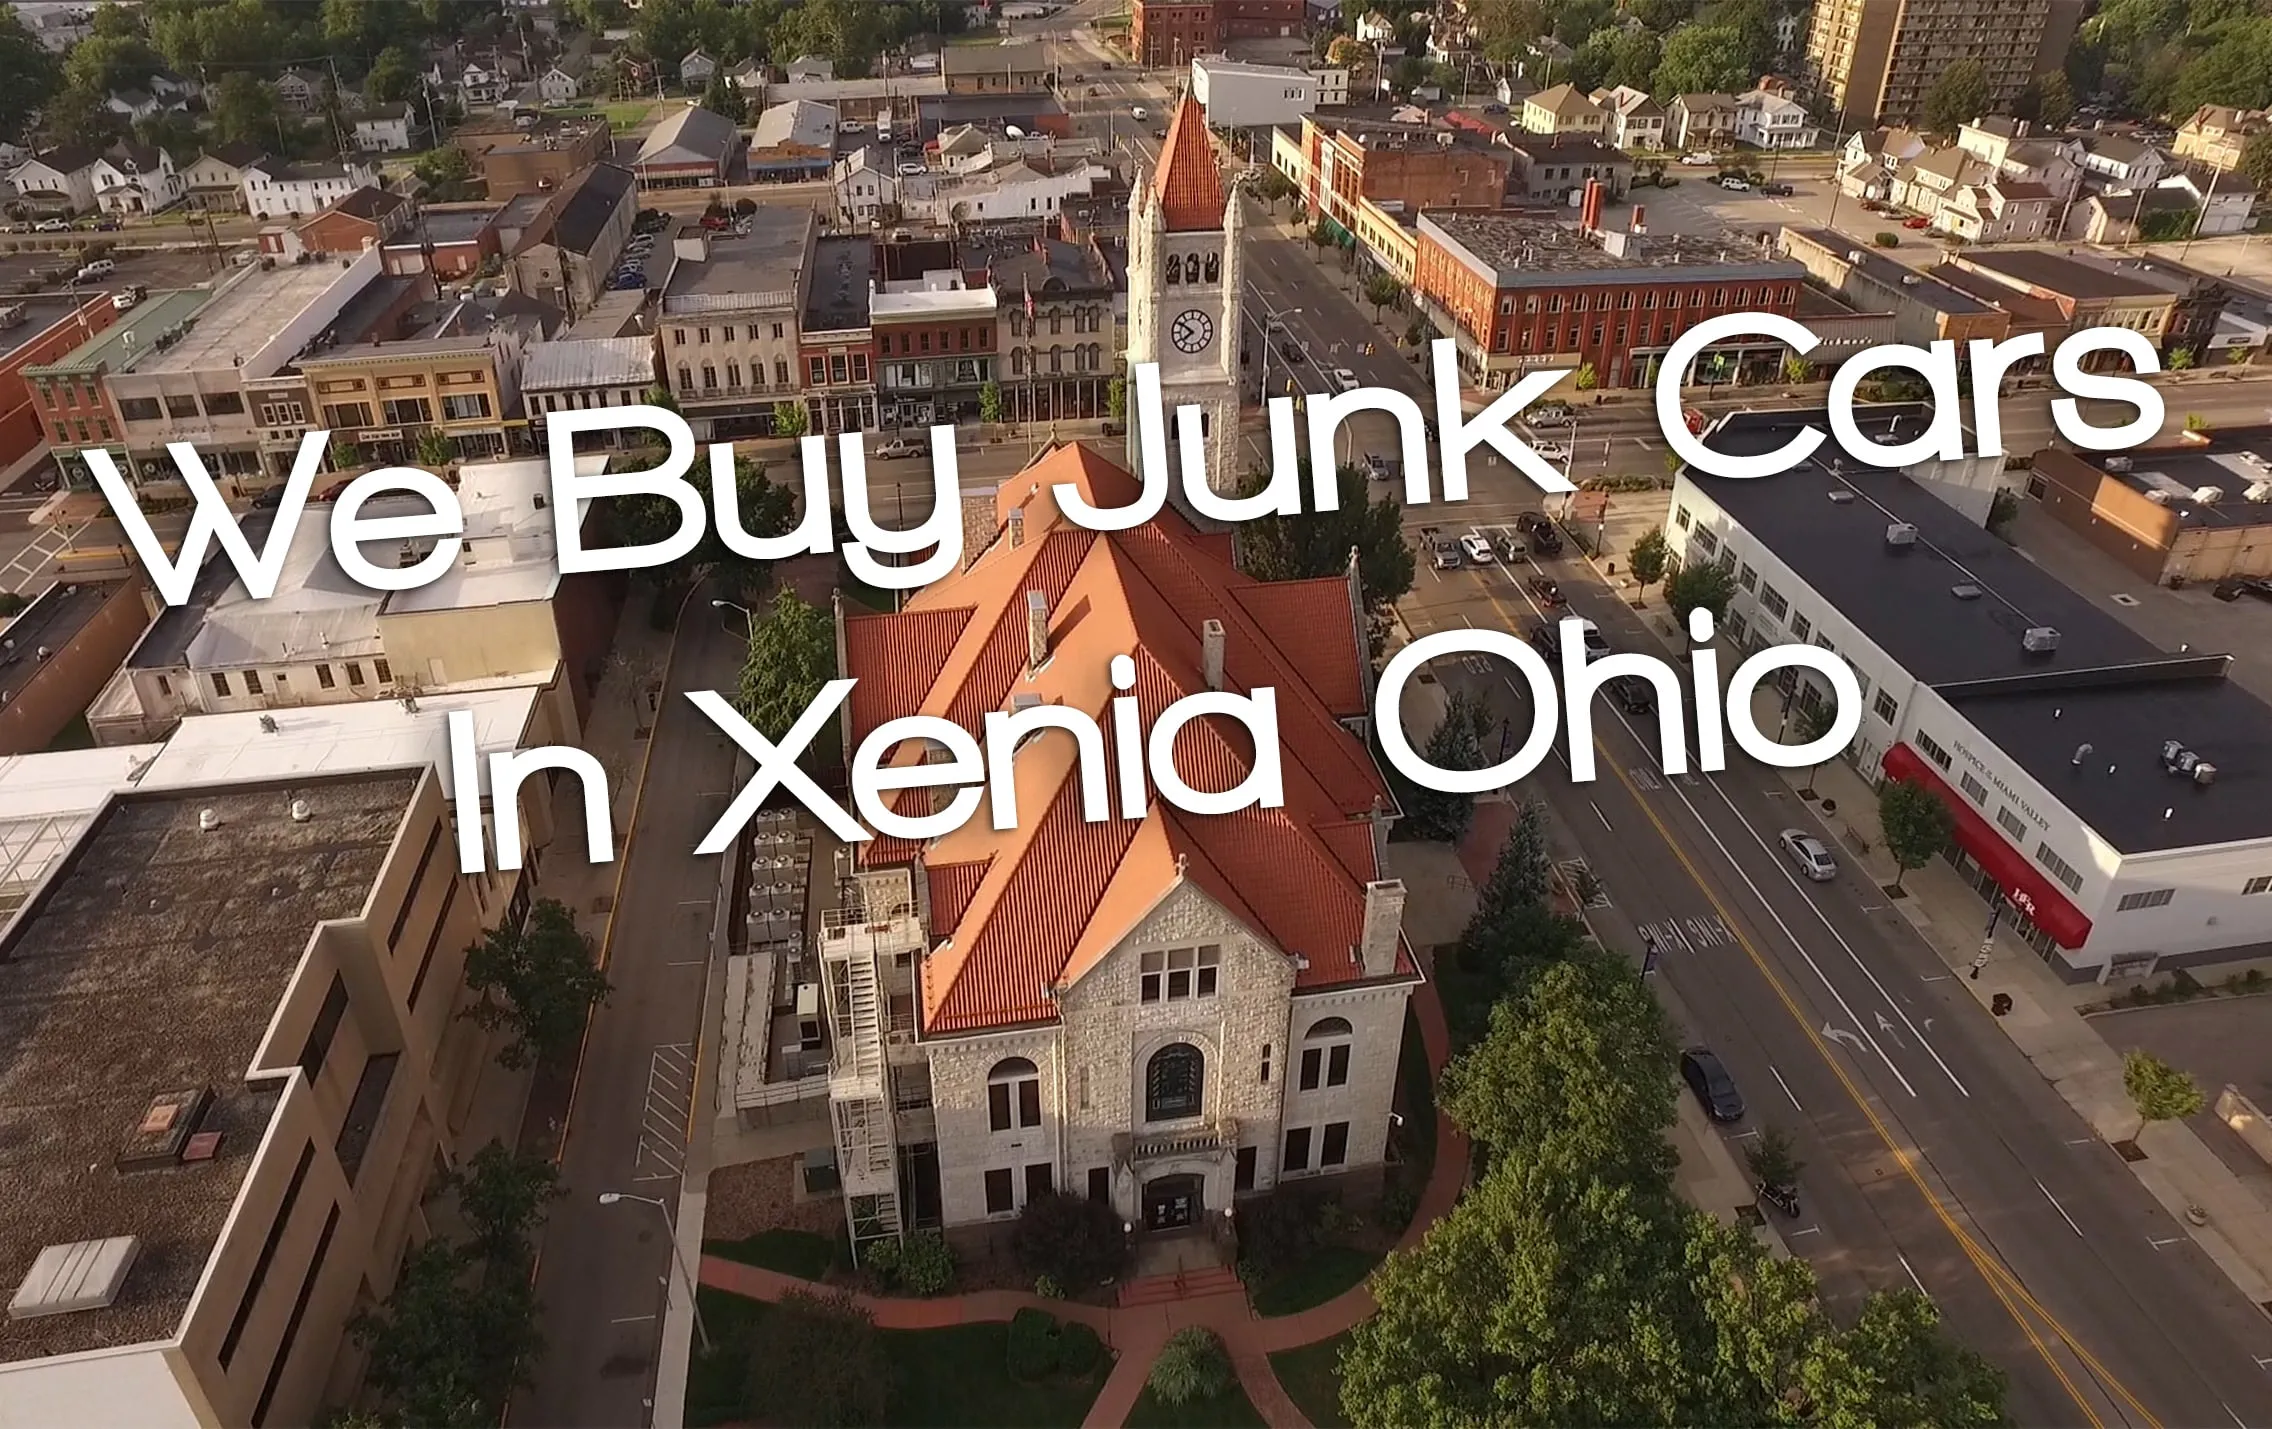 We Buy Junk Cars in Xenia Ohio